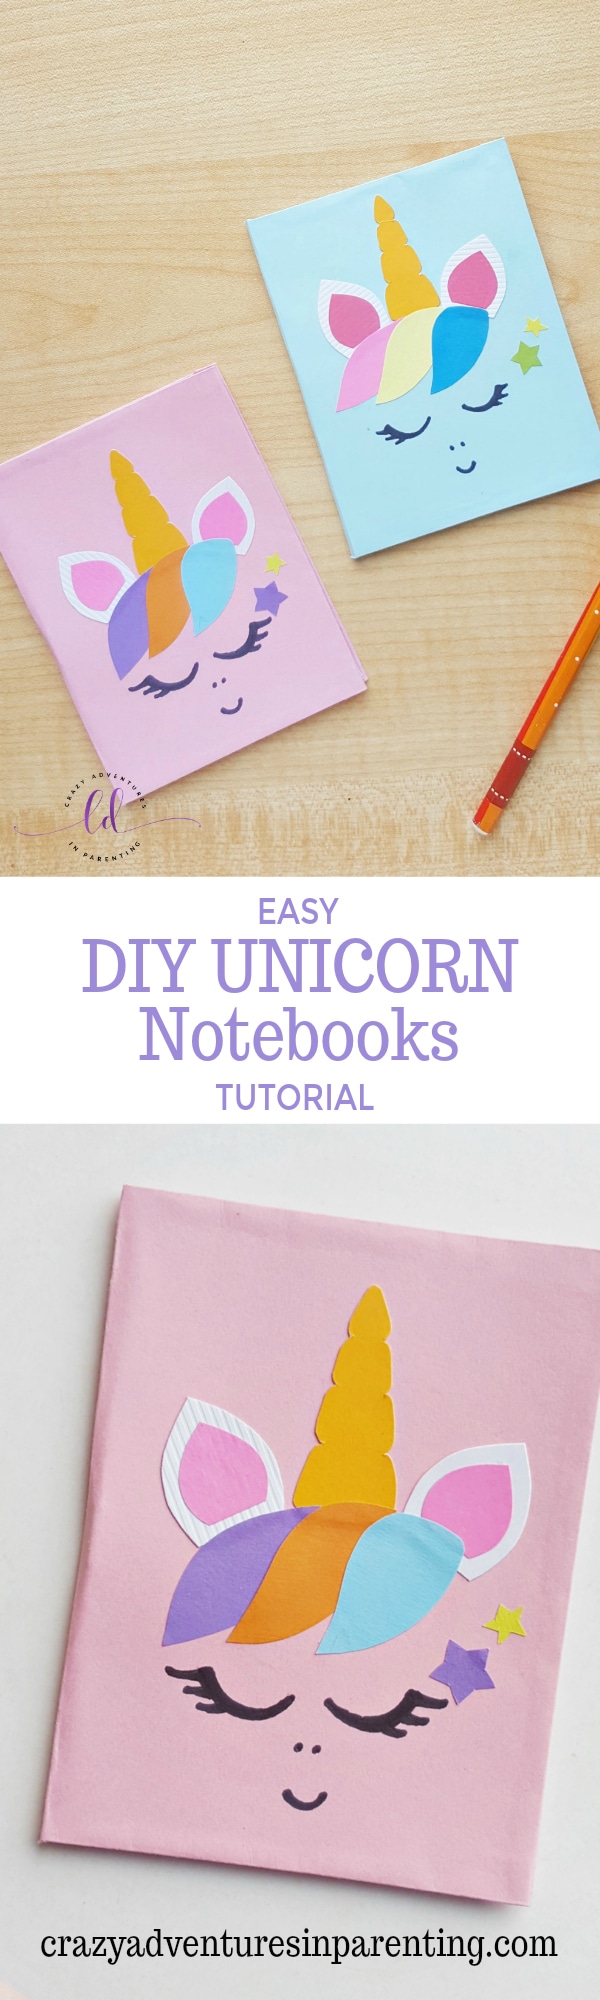 Easy DIY Unicorn Notebooks Tutorial